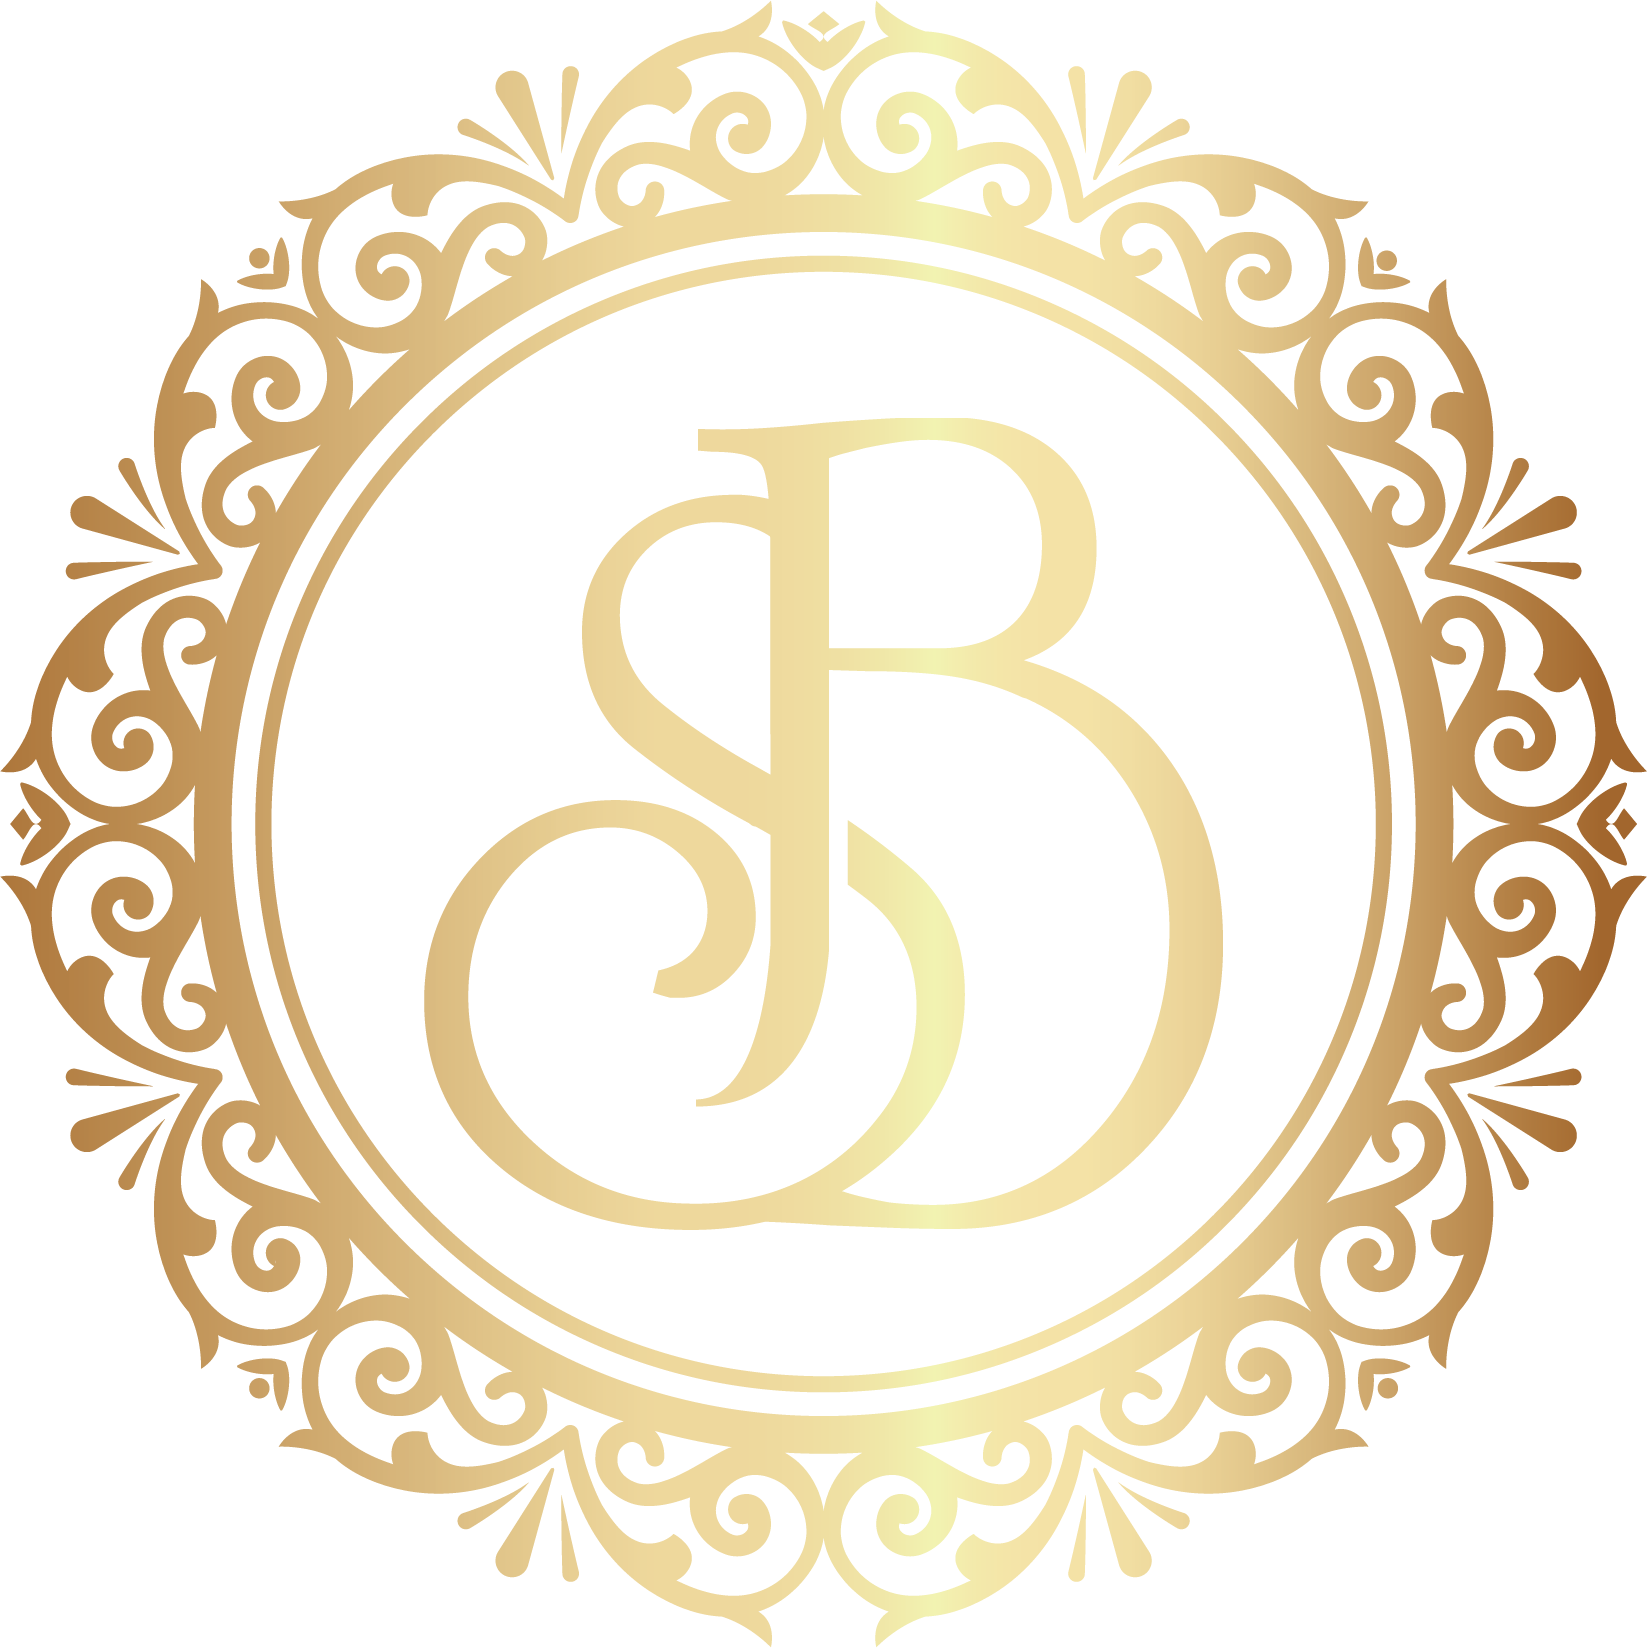 sbj logo